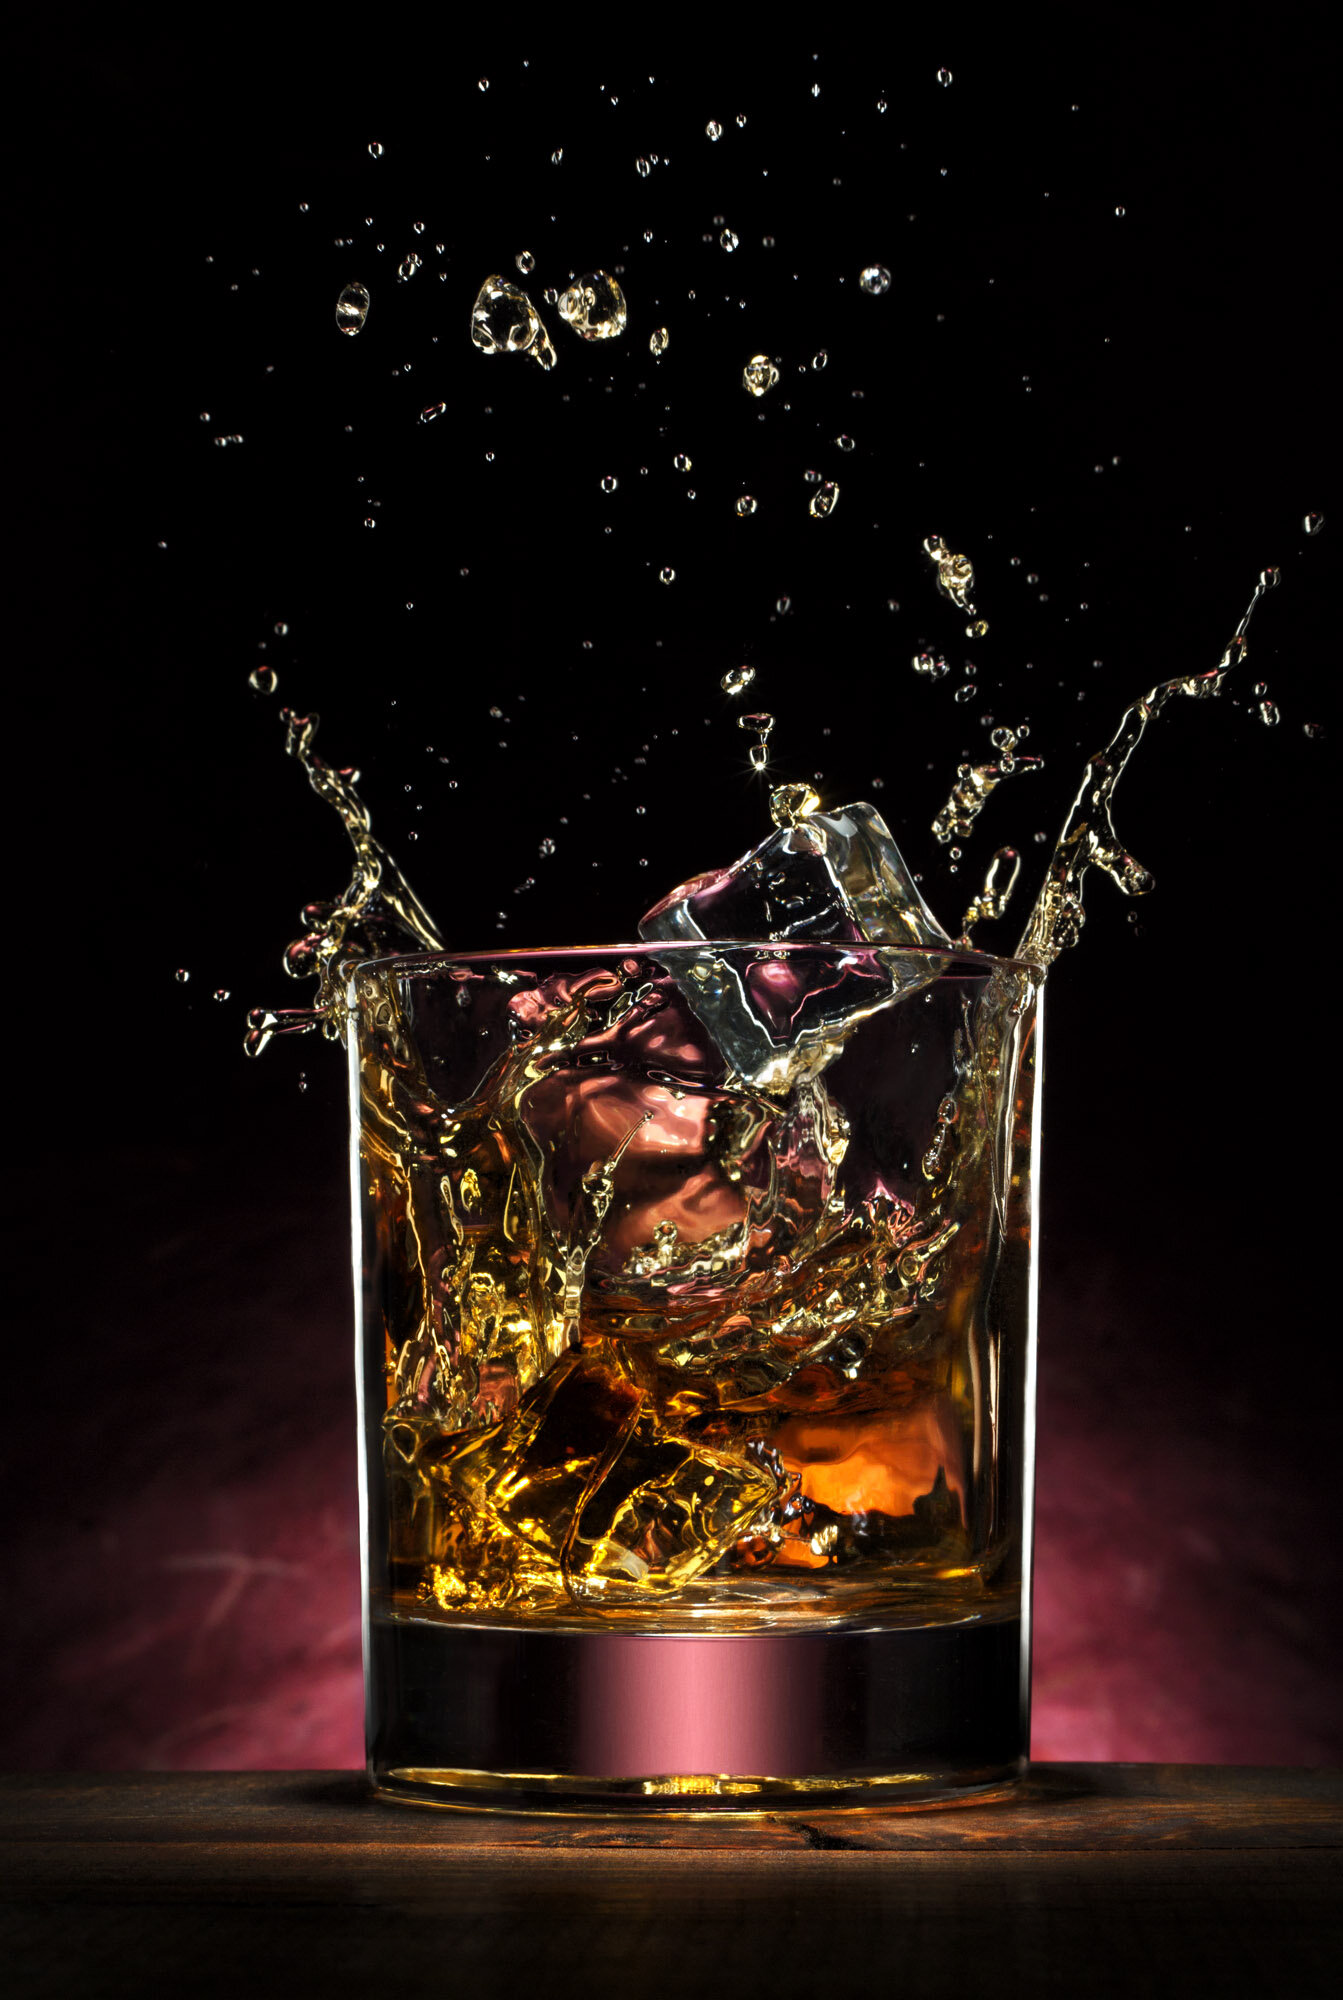 Fielder Williams Strain fiwist Nashville Product Photographer whiskey jack danials splash.jpg